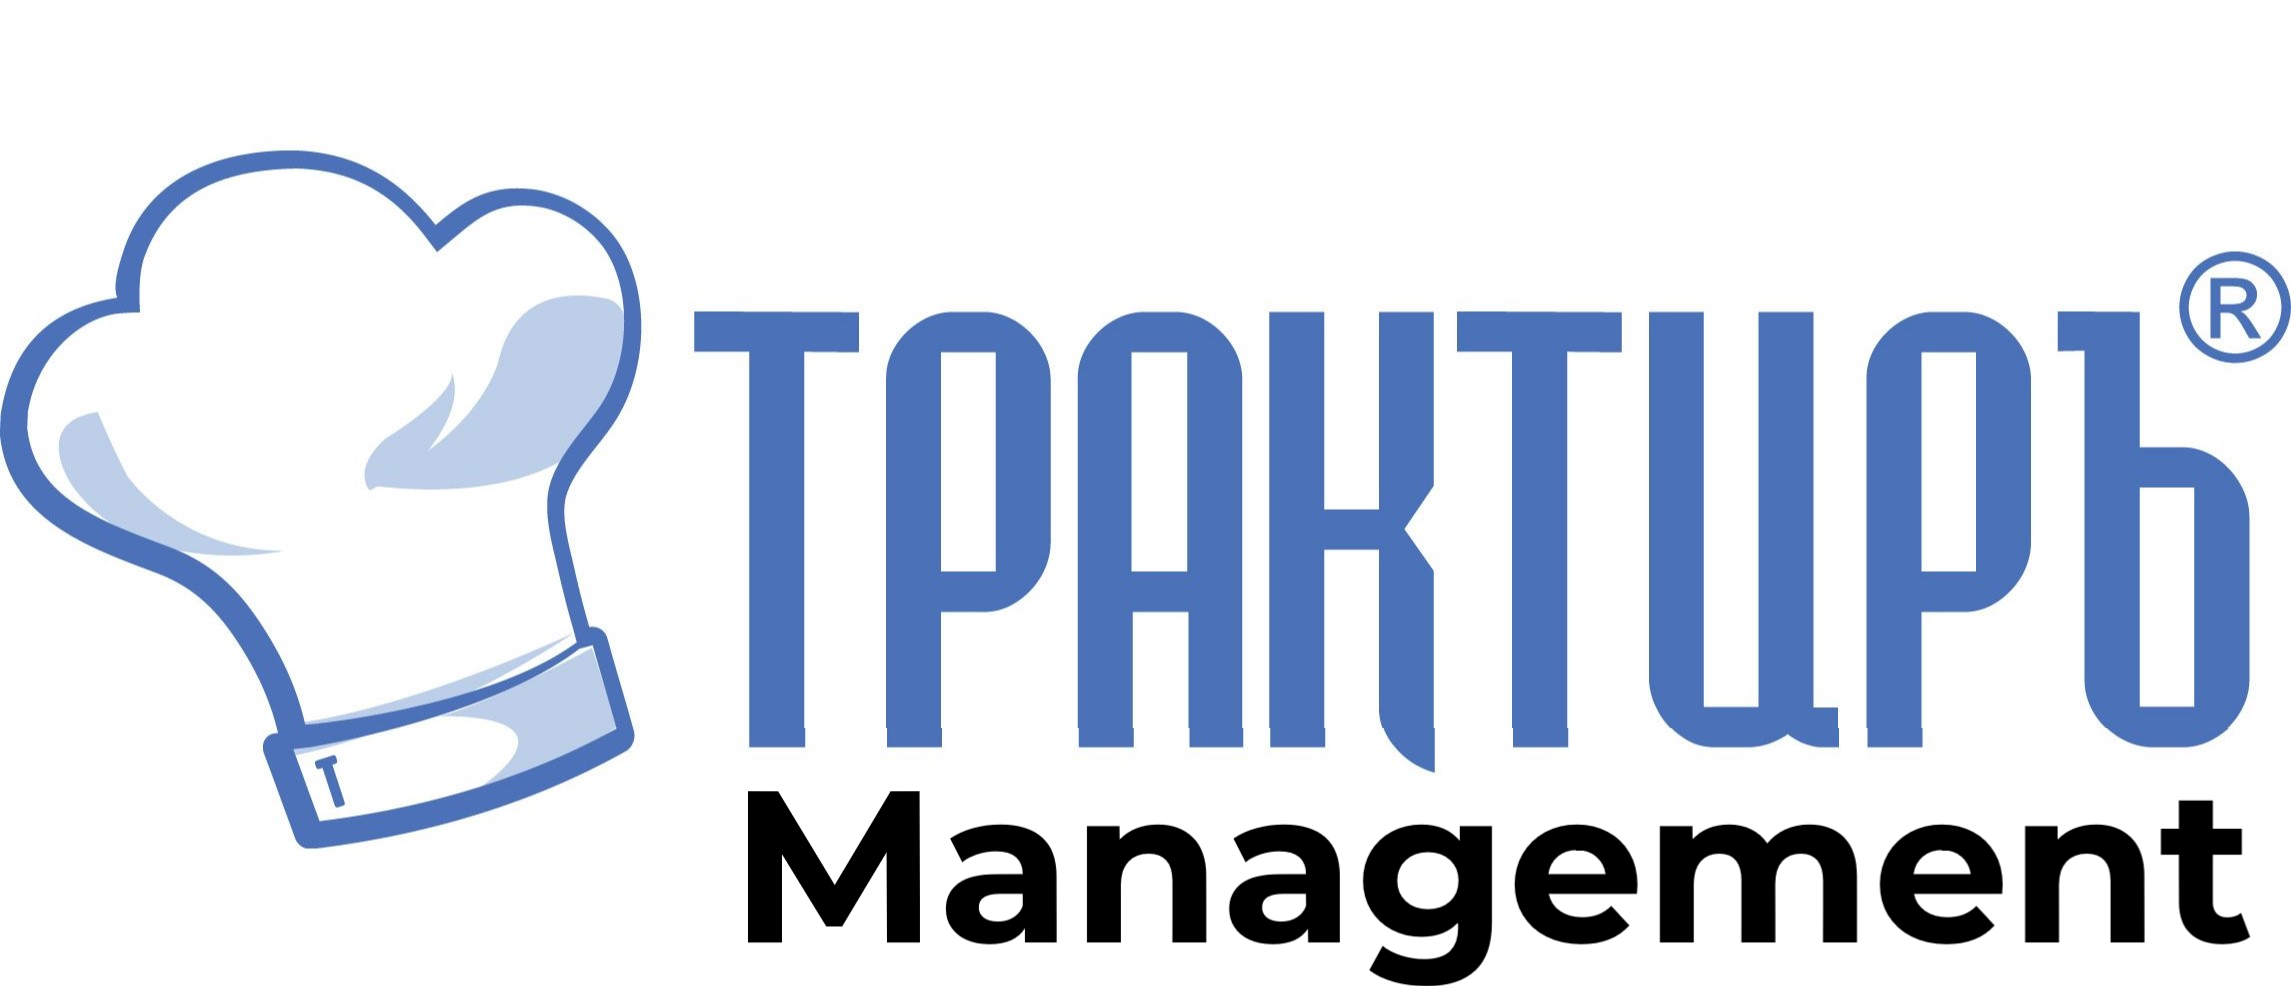 Трактиръ: Management в Пскове